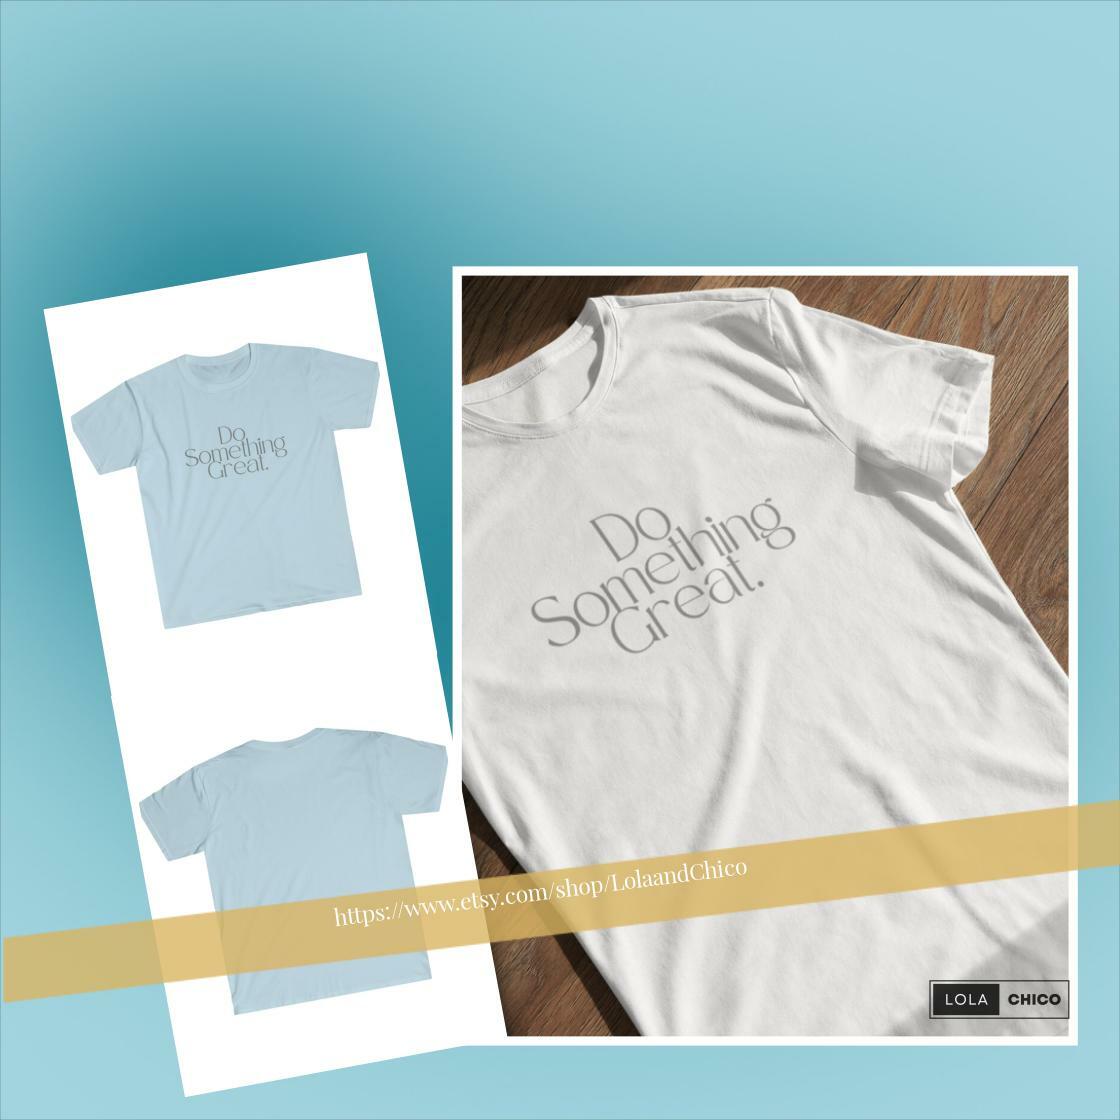 #DoSomethingGreat #inspirational Do Something Great. Unisex Softstyle T-Shirt
$12.97
Get here lolaandchico.patternbyetsy.com/listing/149040…